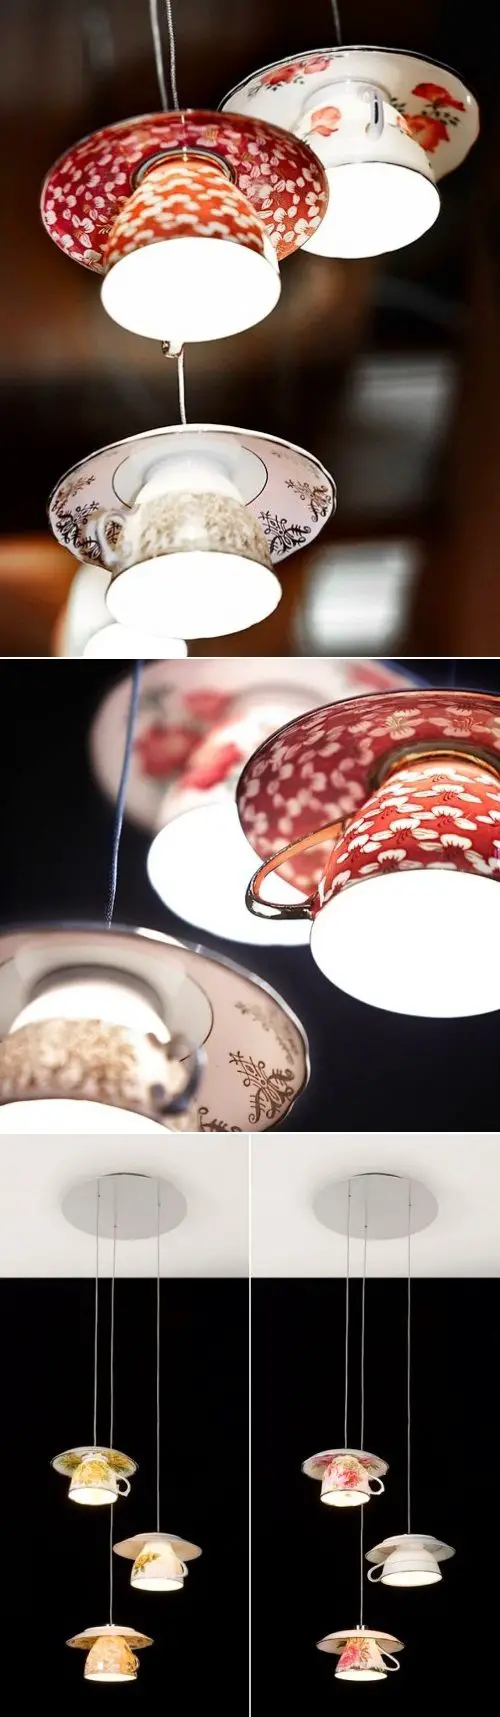 corpuri de iluminat facute acasa DIY lighting ideas 20